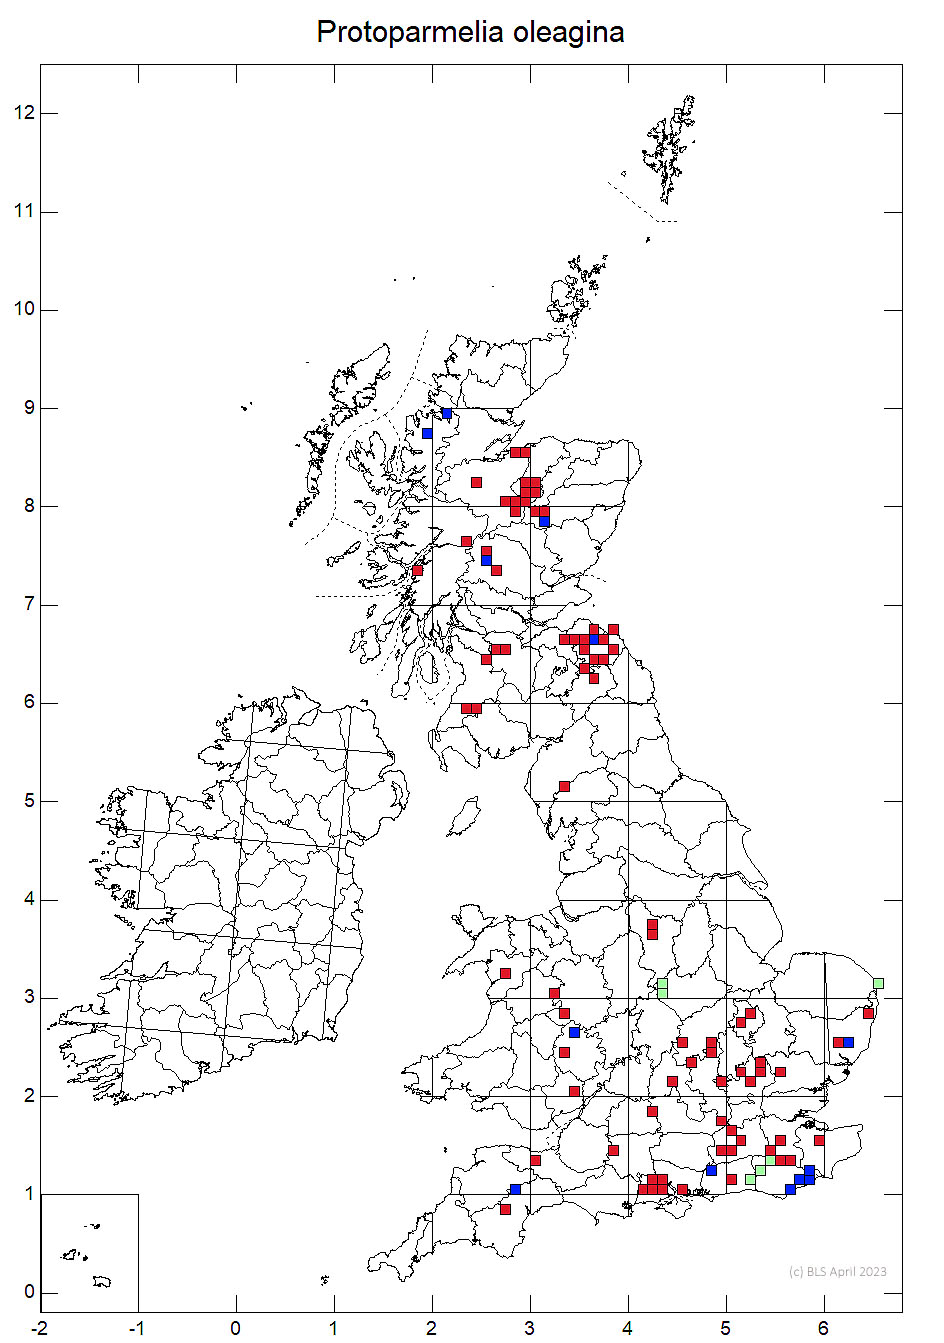 Protoparmelia oleagina 10km sq distribution map